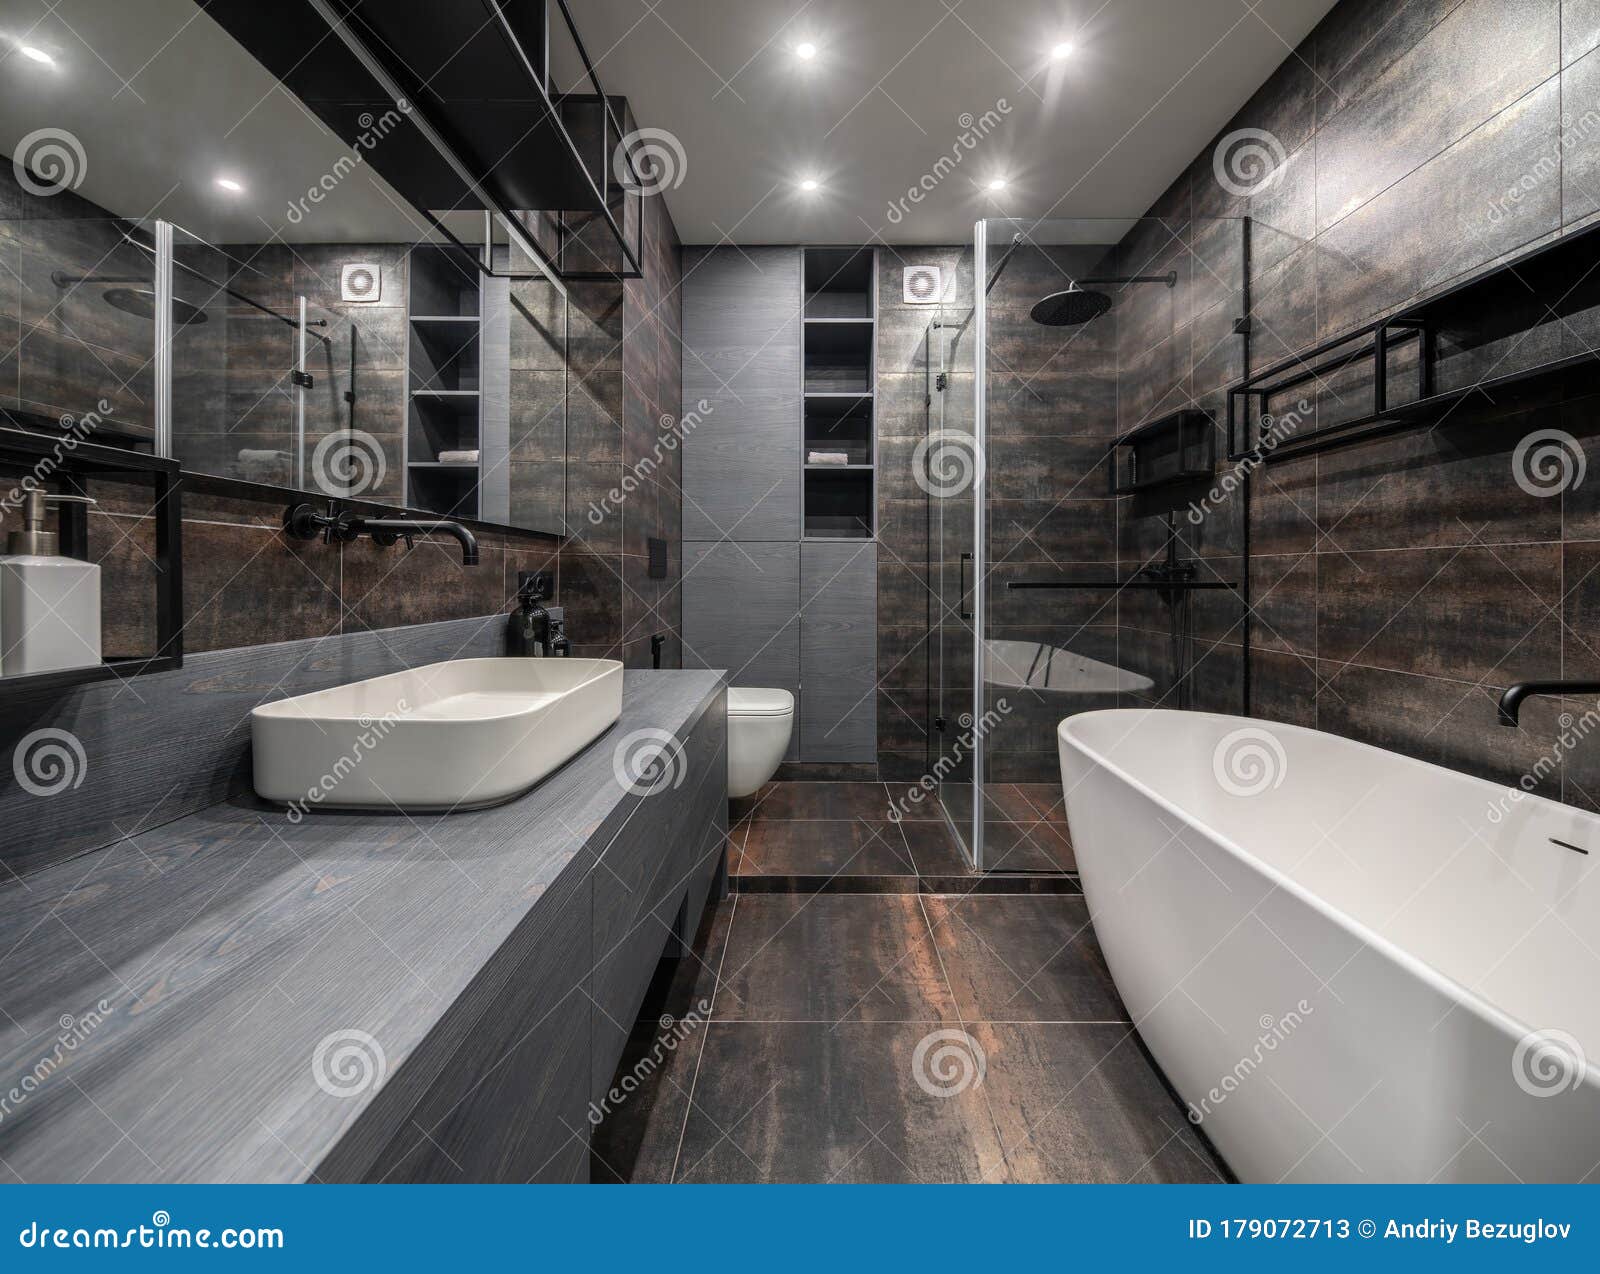 Interior of Luminous Modern Bathroom with Bronze Walls Stock Image ...